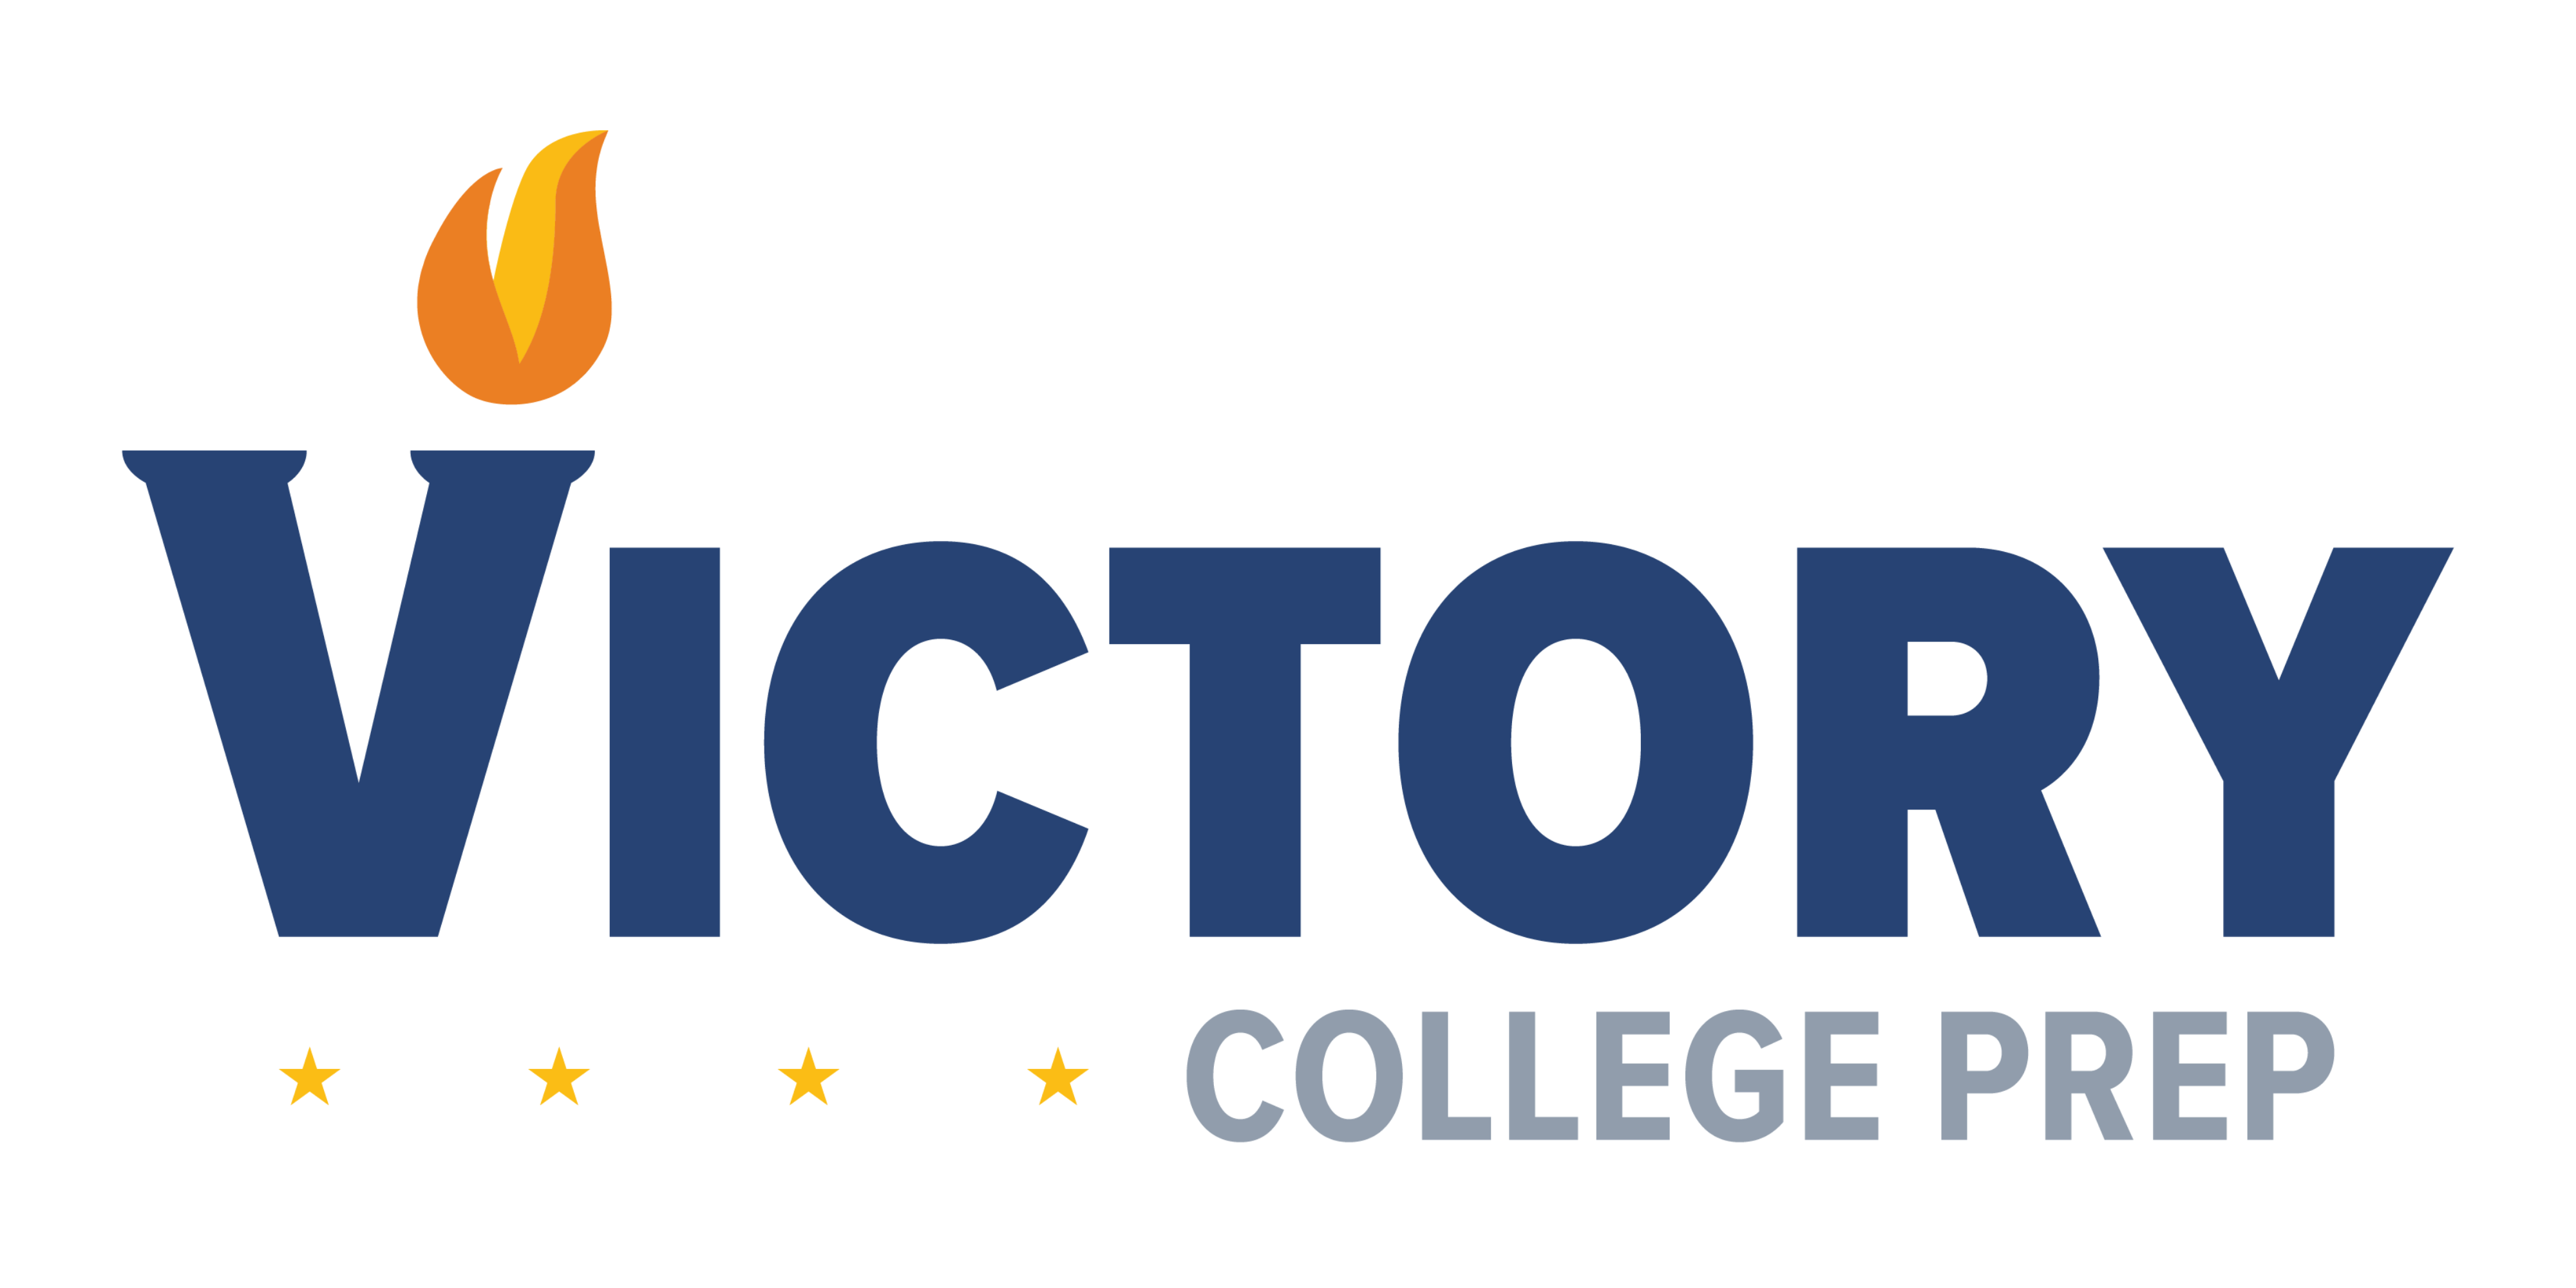 Victory College Prep logo